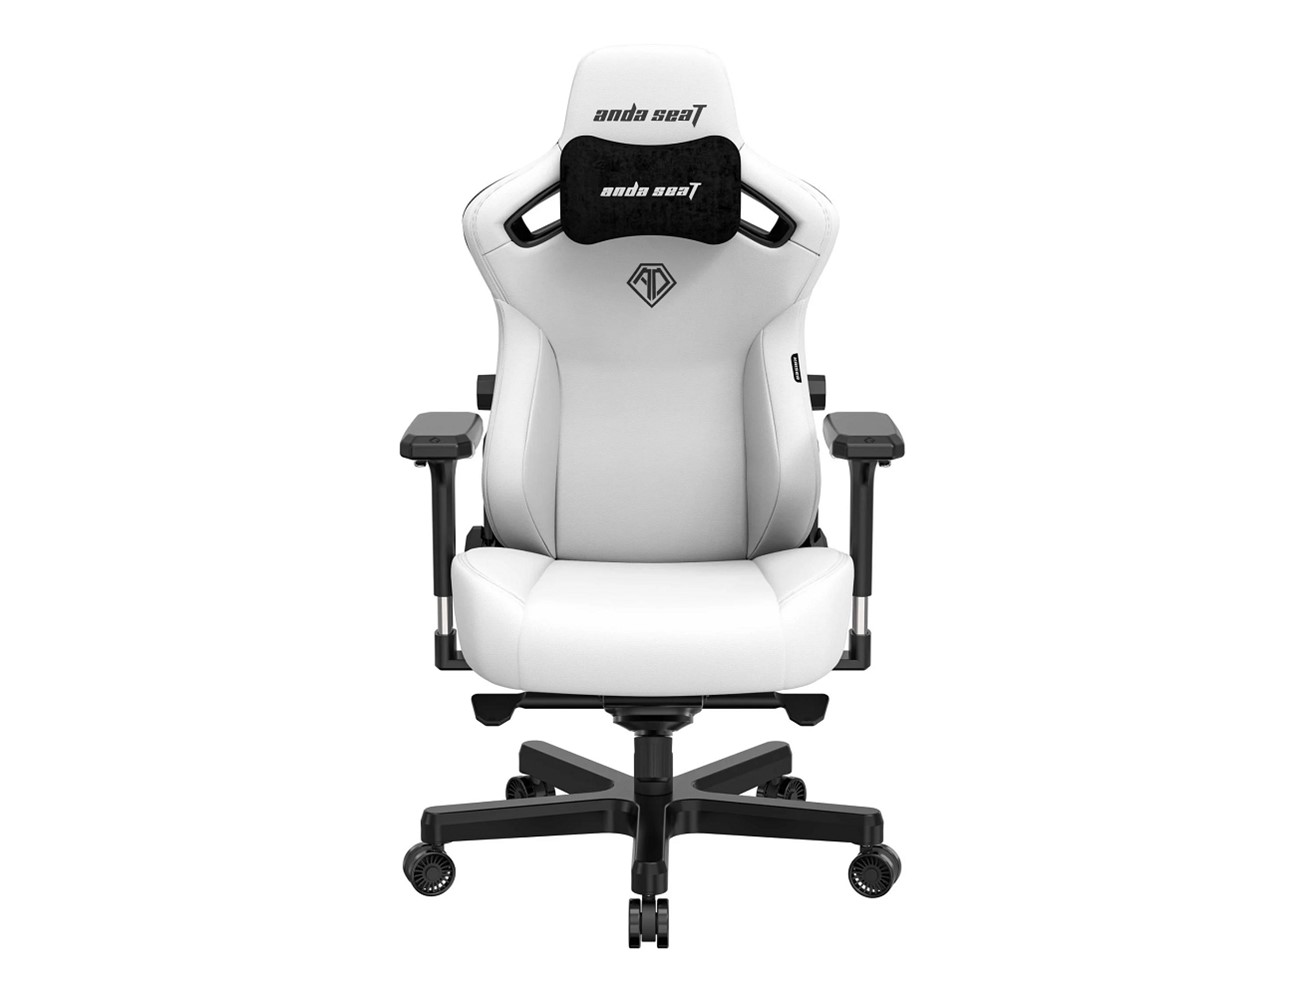 Anda Seat Kaiser 3 Large Premium Ergonomic Gaming/Office Chair